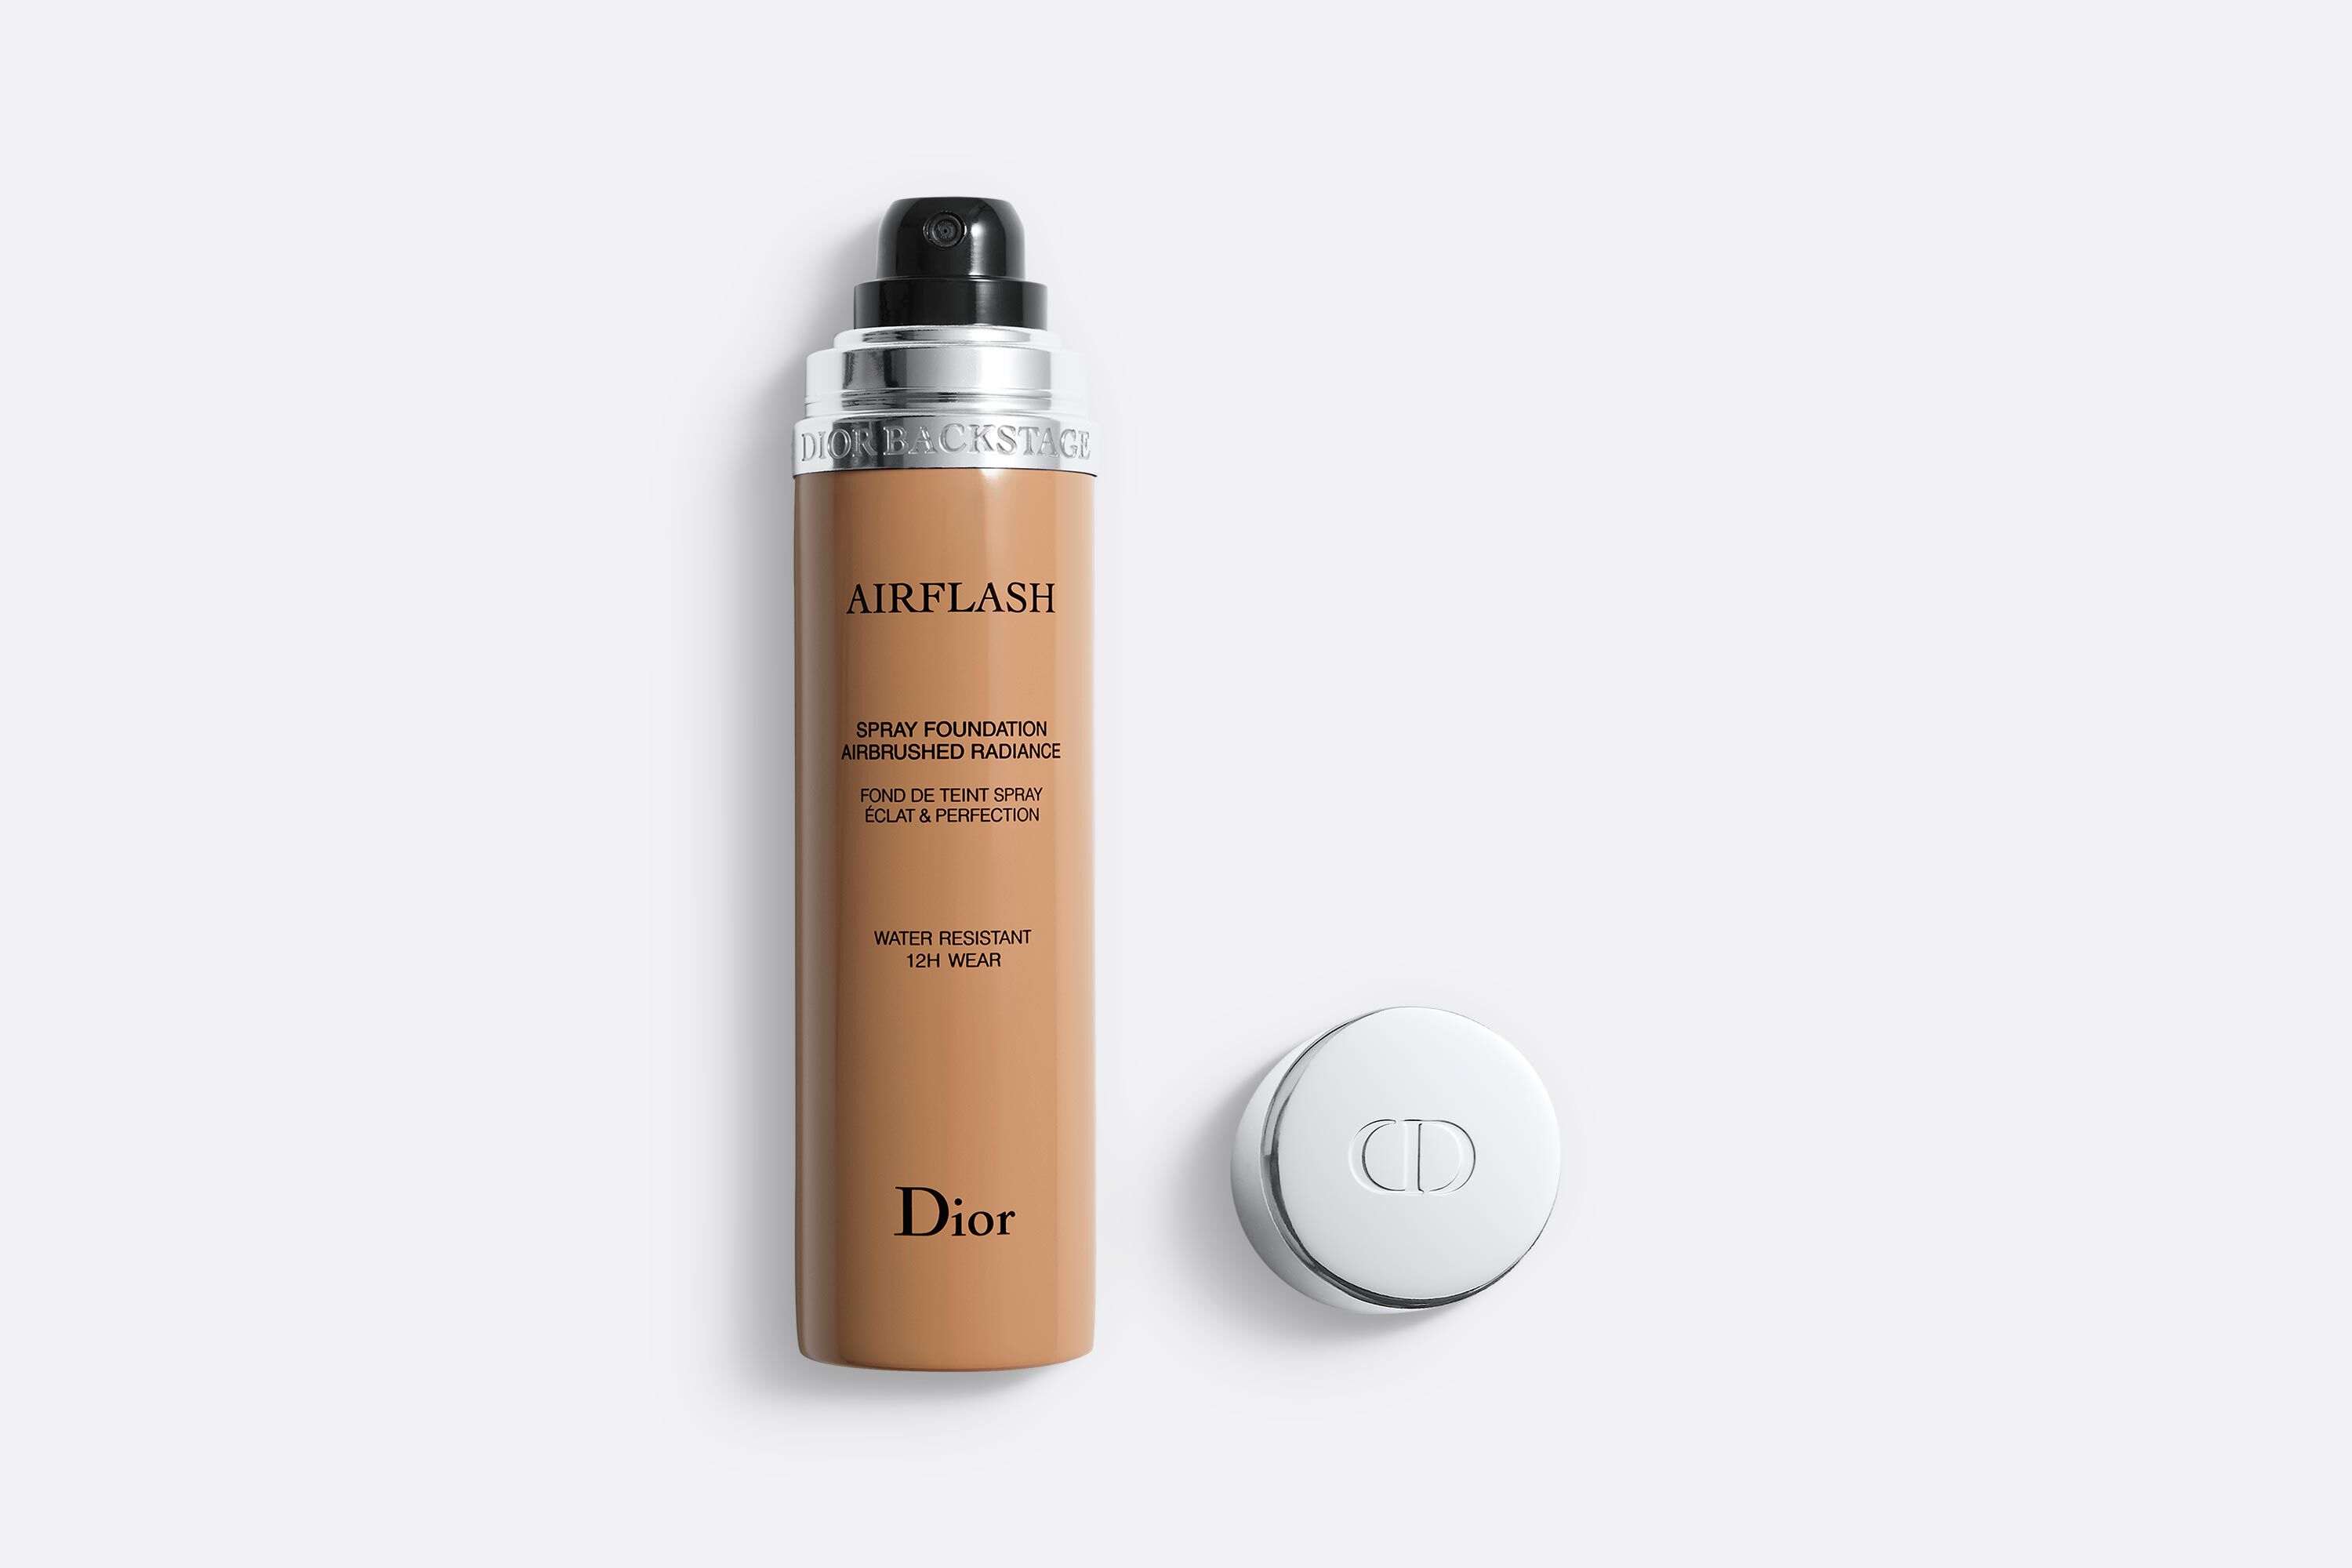 Dior Airflash Spray Foundation